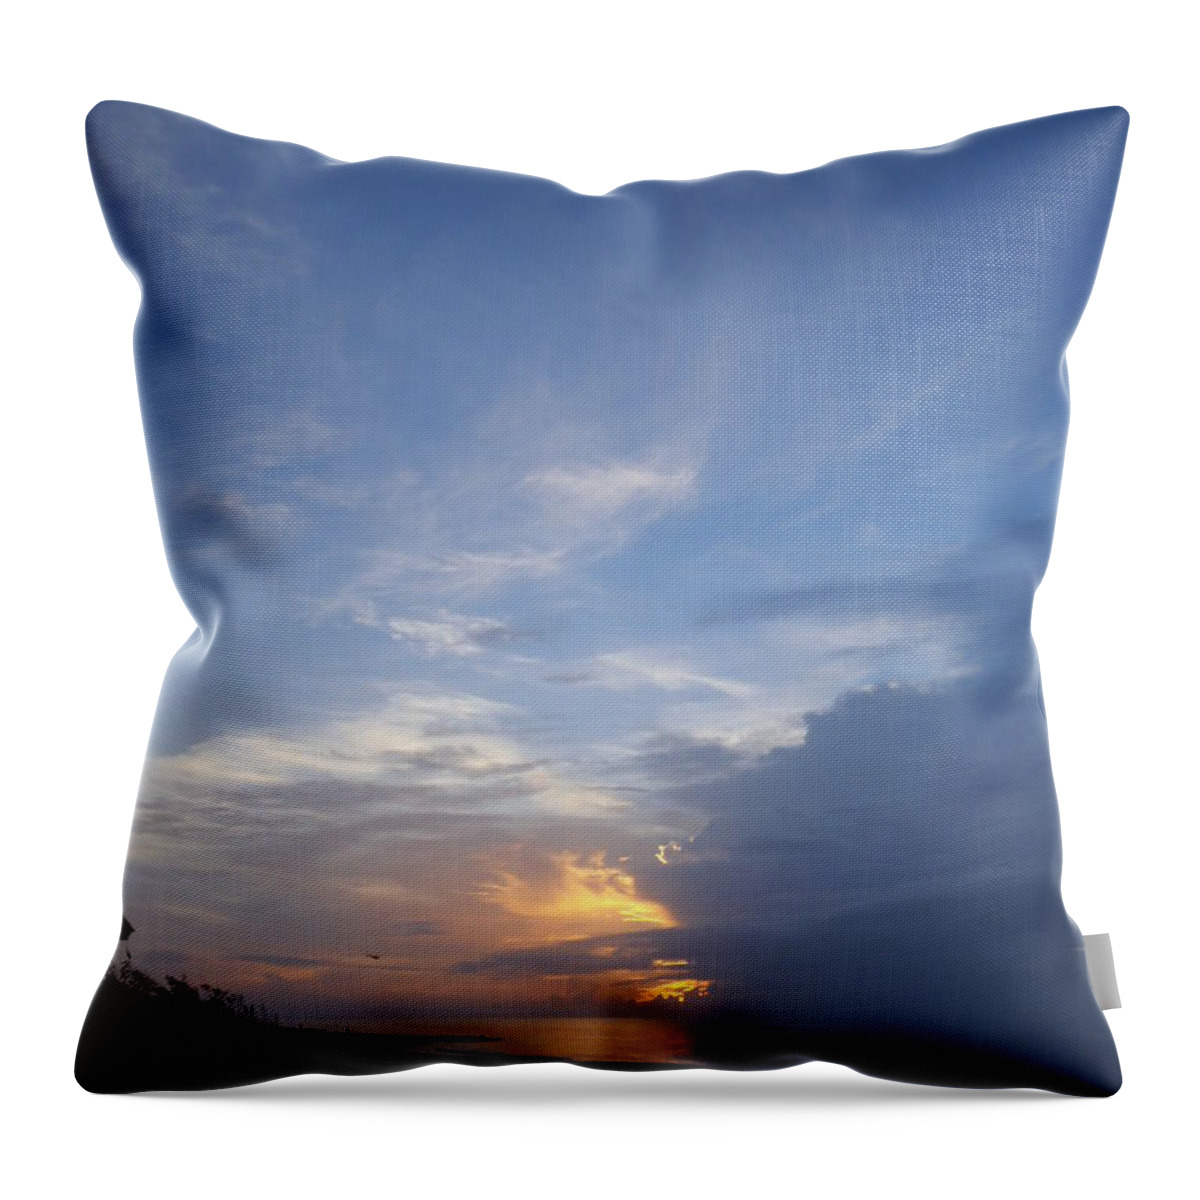  Throw Pillow featuring the photograph Edisto Morning by Heather E Harman